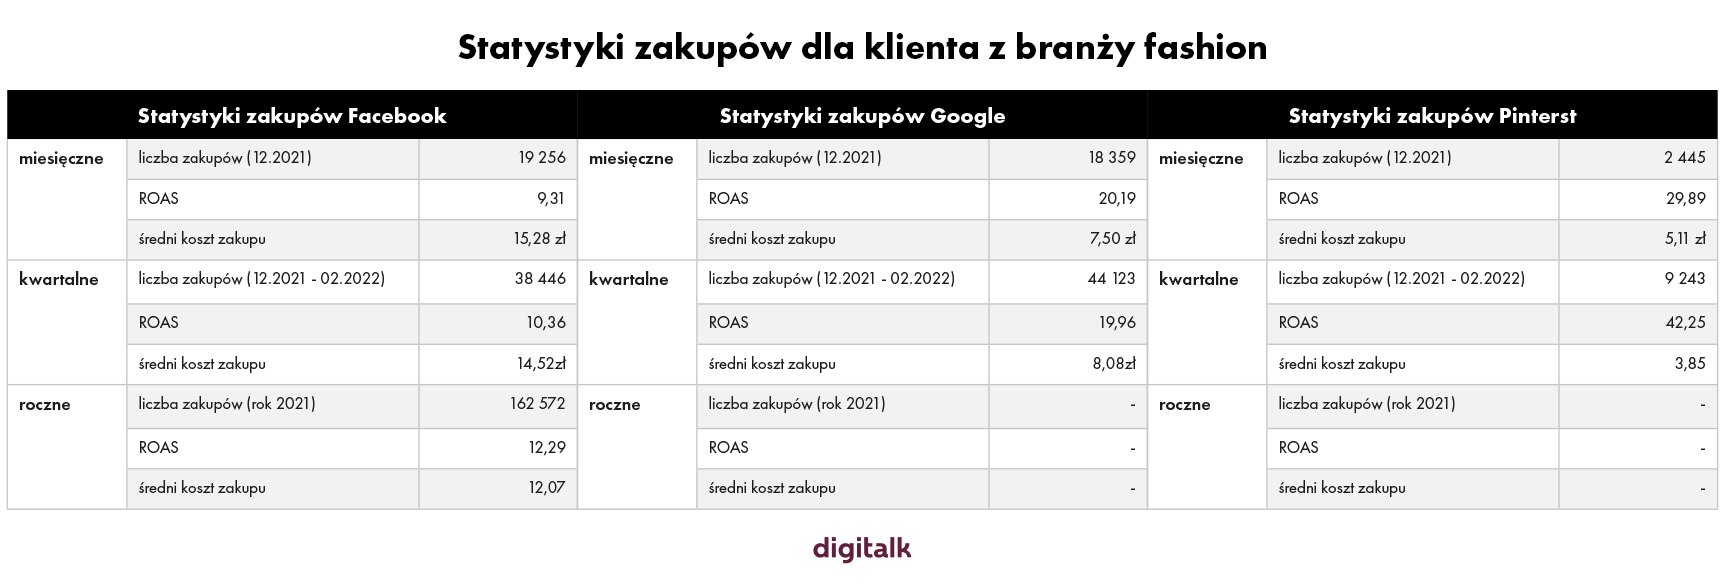 digitalk_tabelka_wyniki_Pinterest